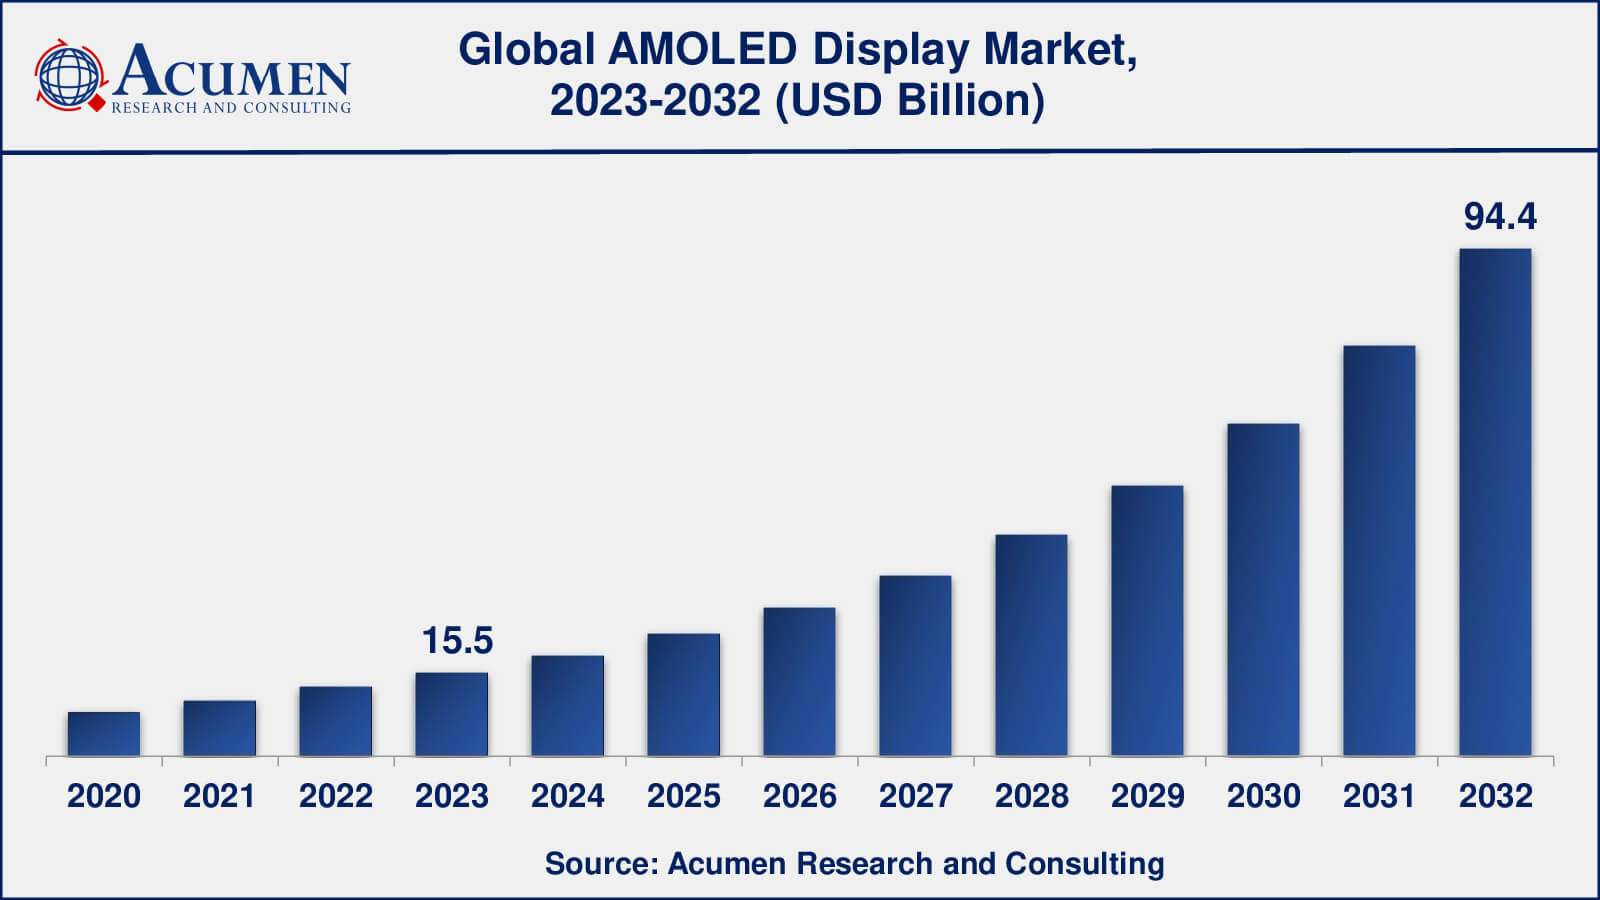 Global AMOLED Display Market Dynamics